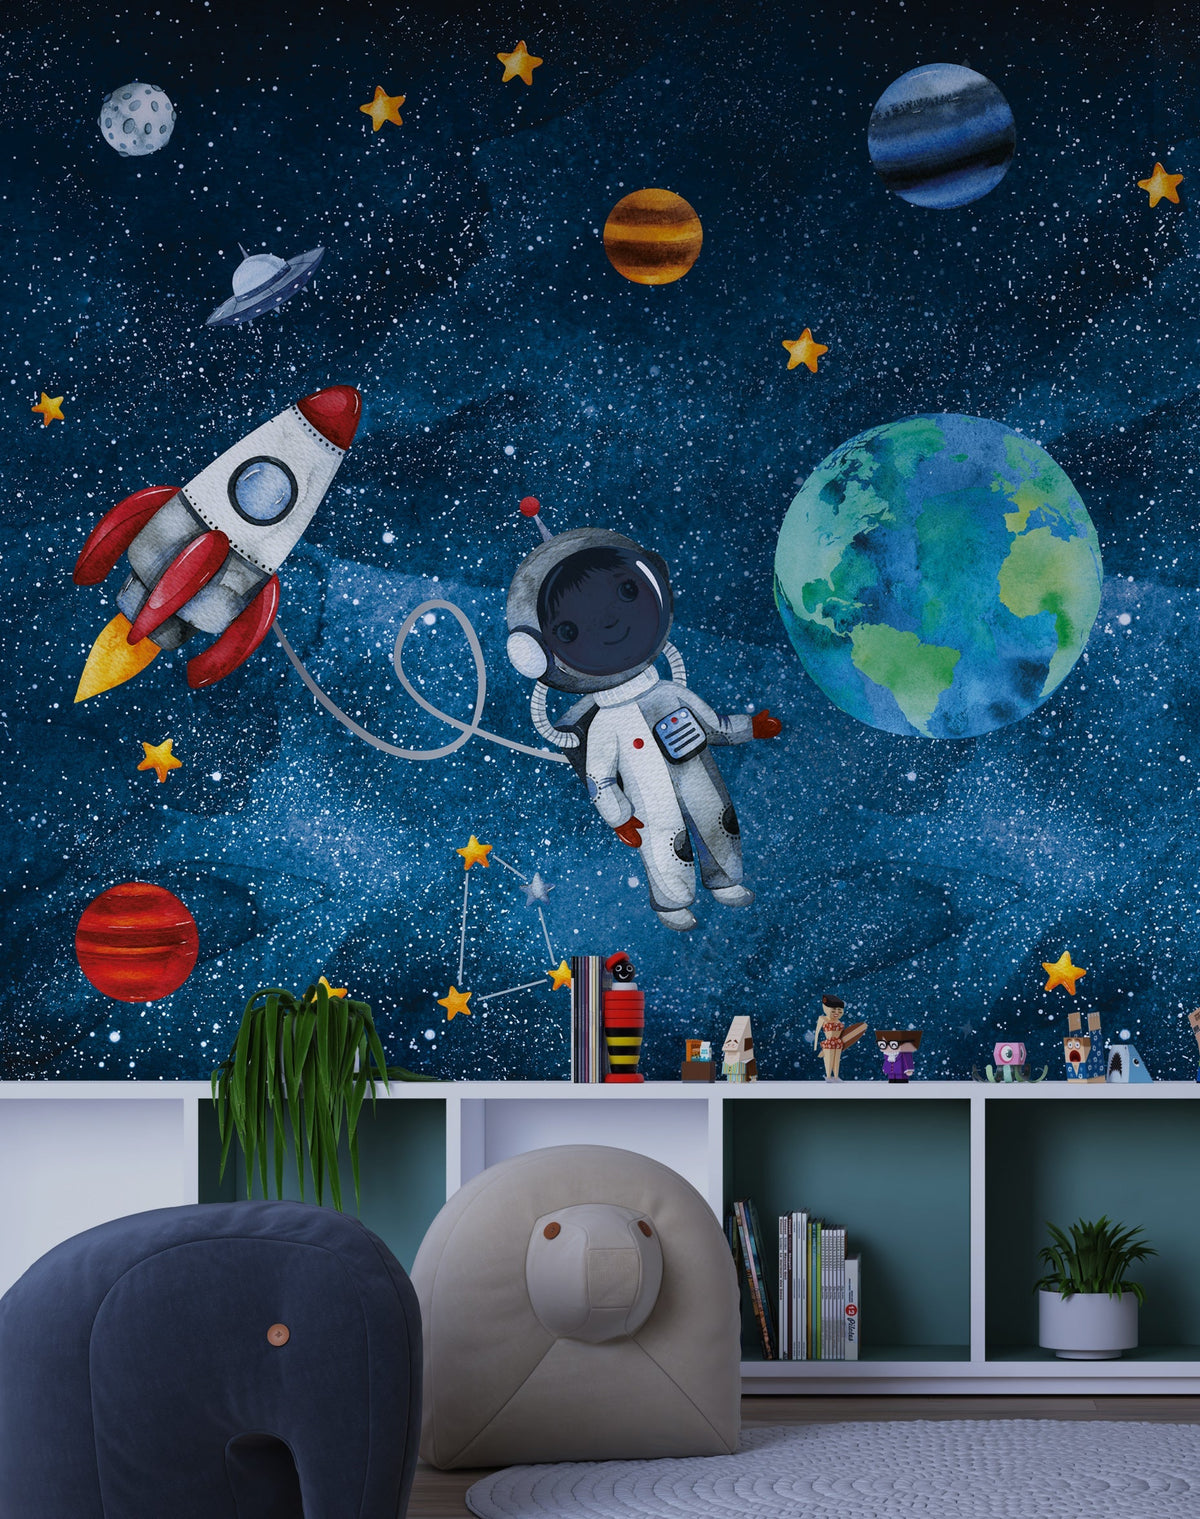 Kids Room Wallpaper Mural: Explore Space with Astronaut-ChandeliersDecor